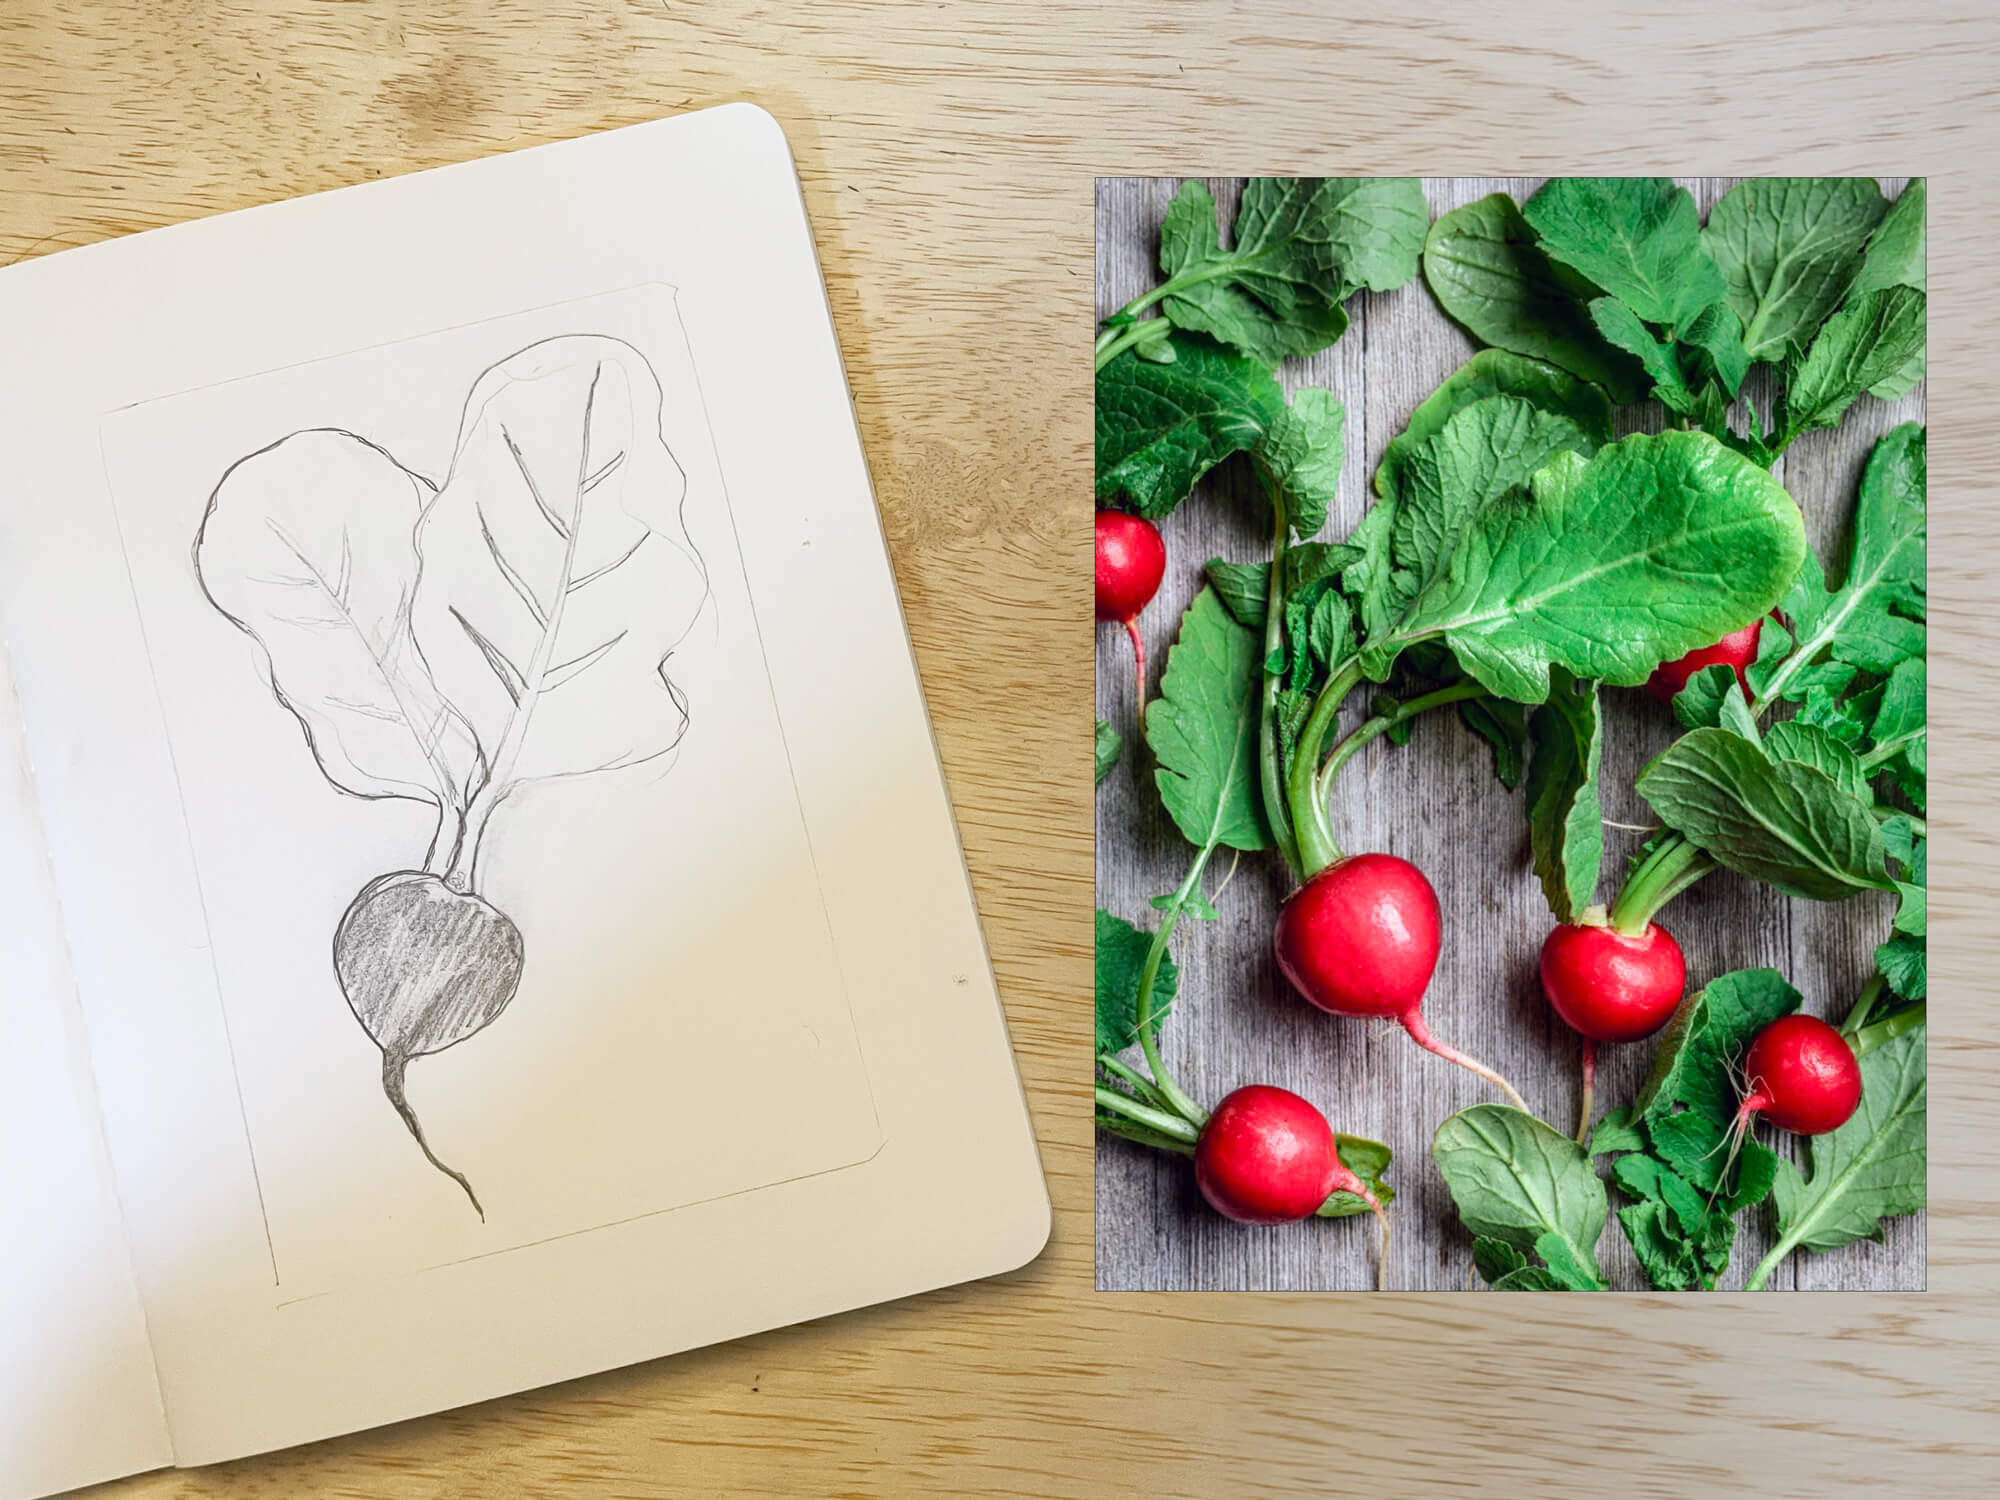 sketch of turnip next to photo of turnip